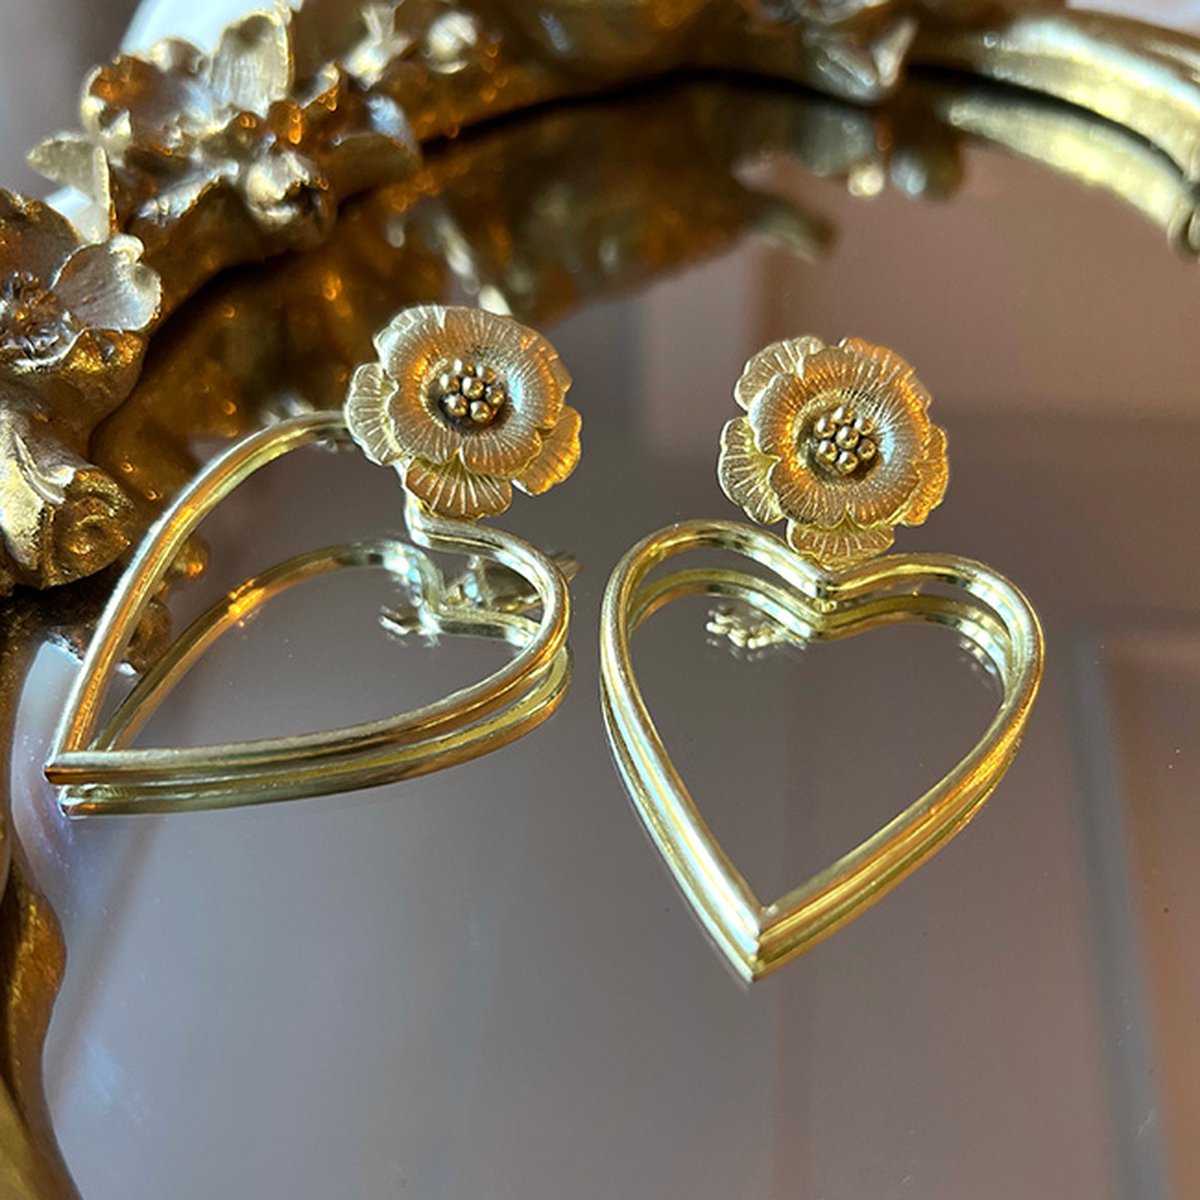 Le Rêve Amsterdam - Oorbellen met bloem en hart - goud op zilver- oorhangers